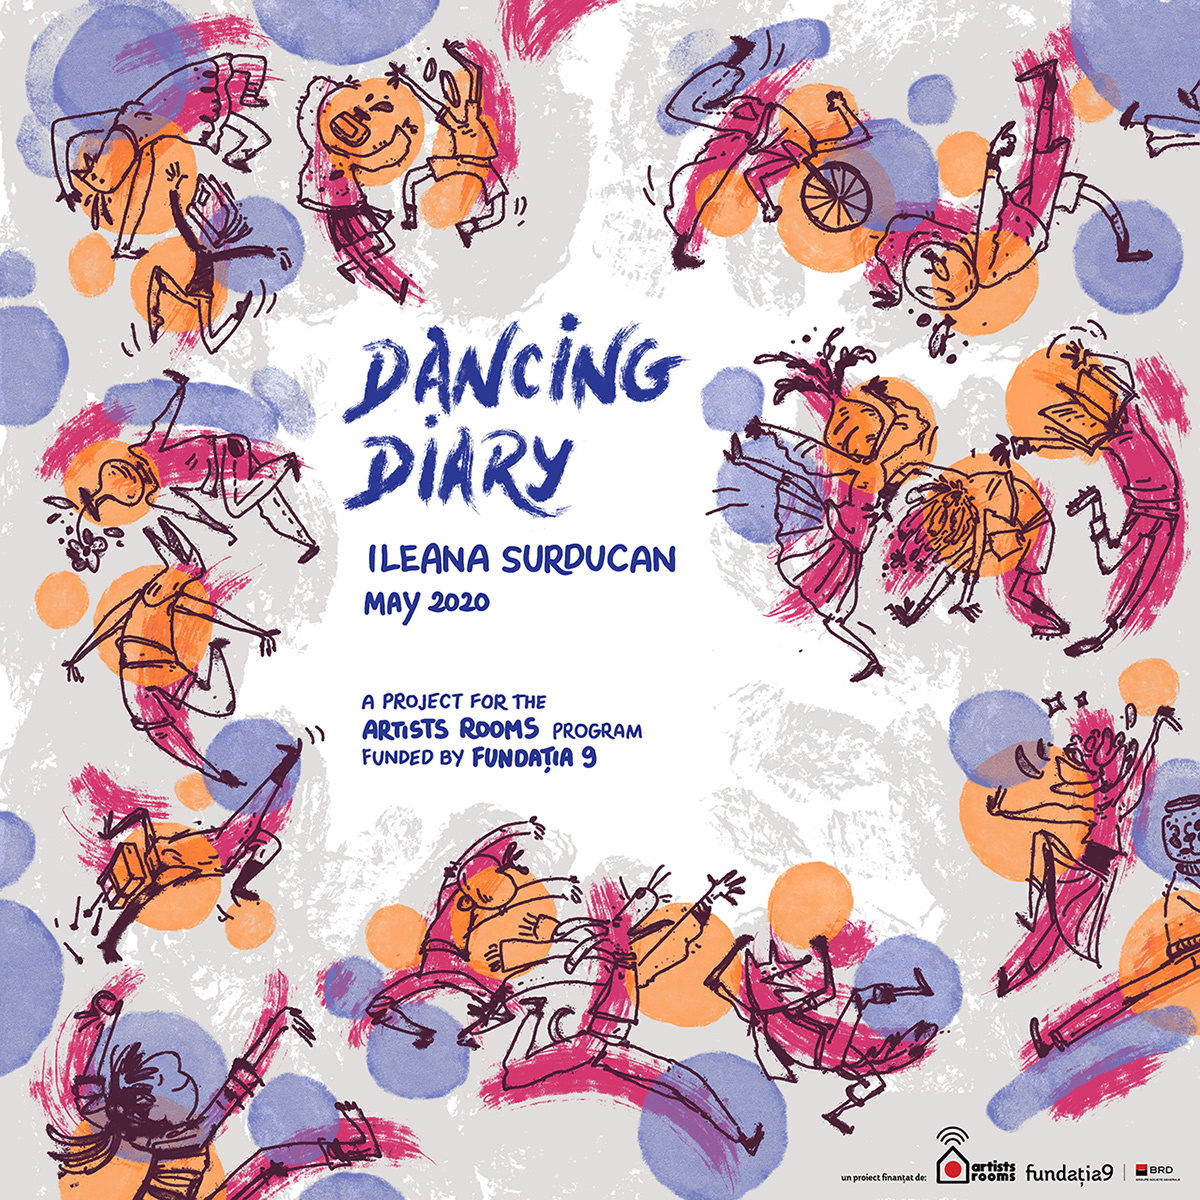 2020 pandemic argentine tango colorful dancing ileana surducan ILLUSTRATION  Isolation Learning to Dance milonga Romanian artist